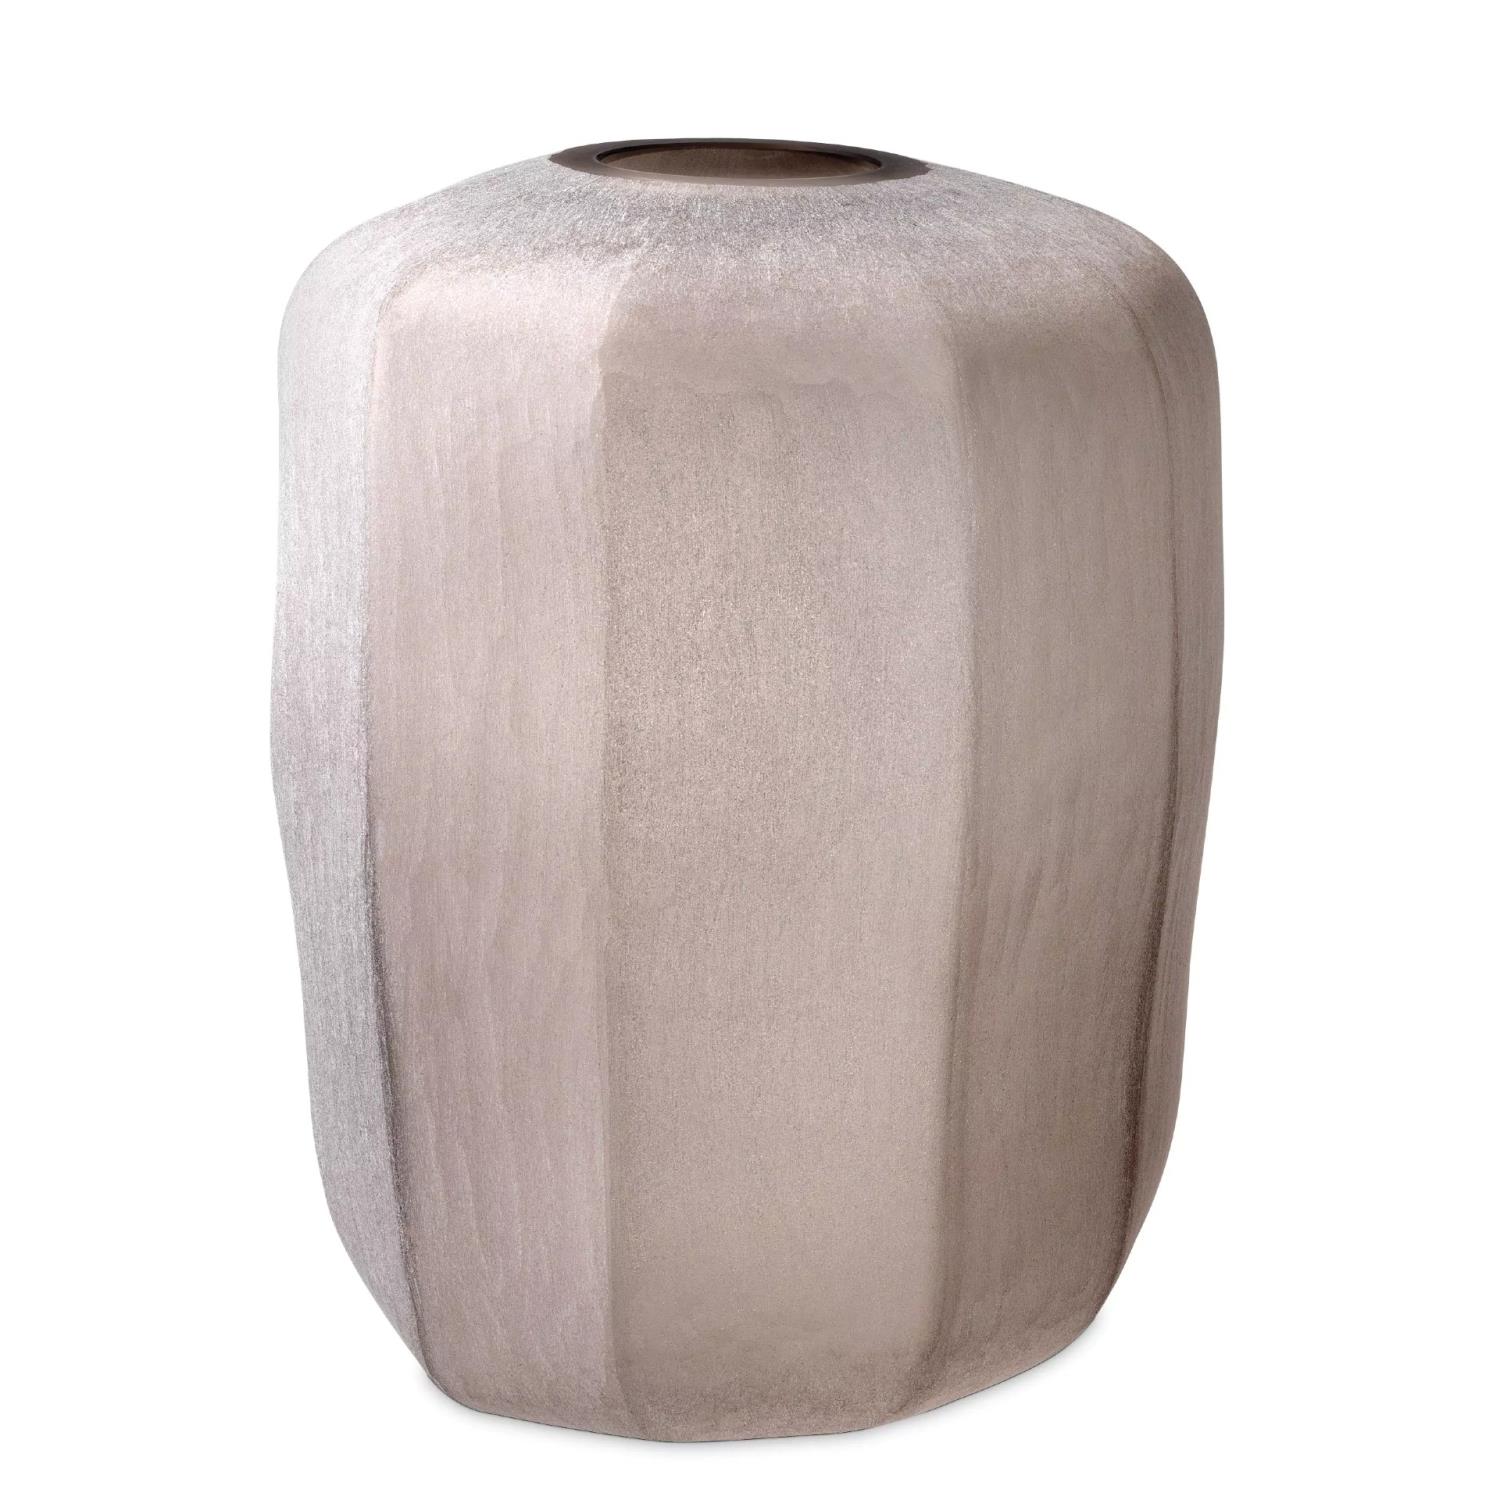 Vase Avance Sand L 112574